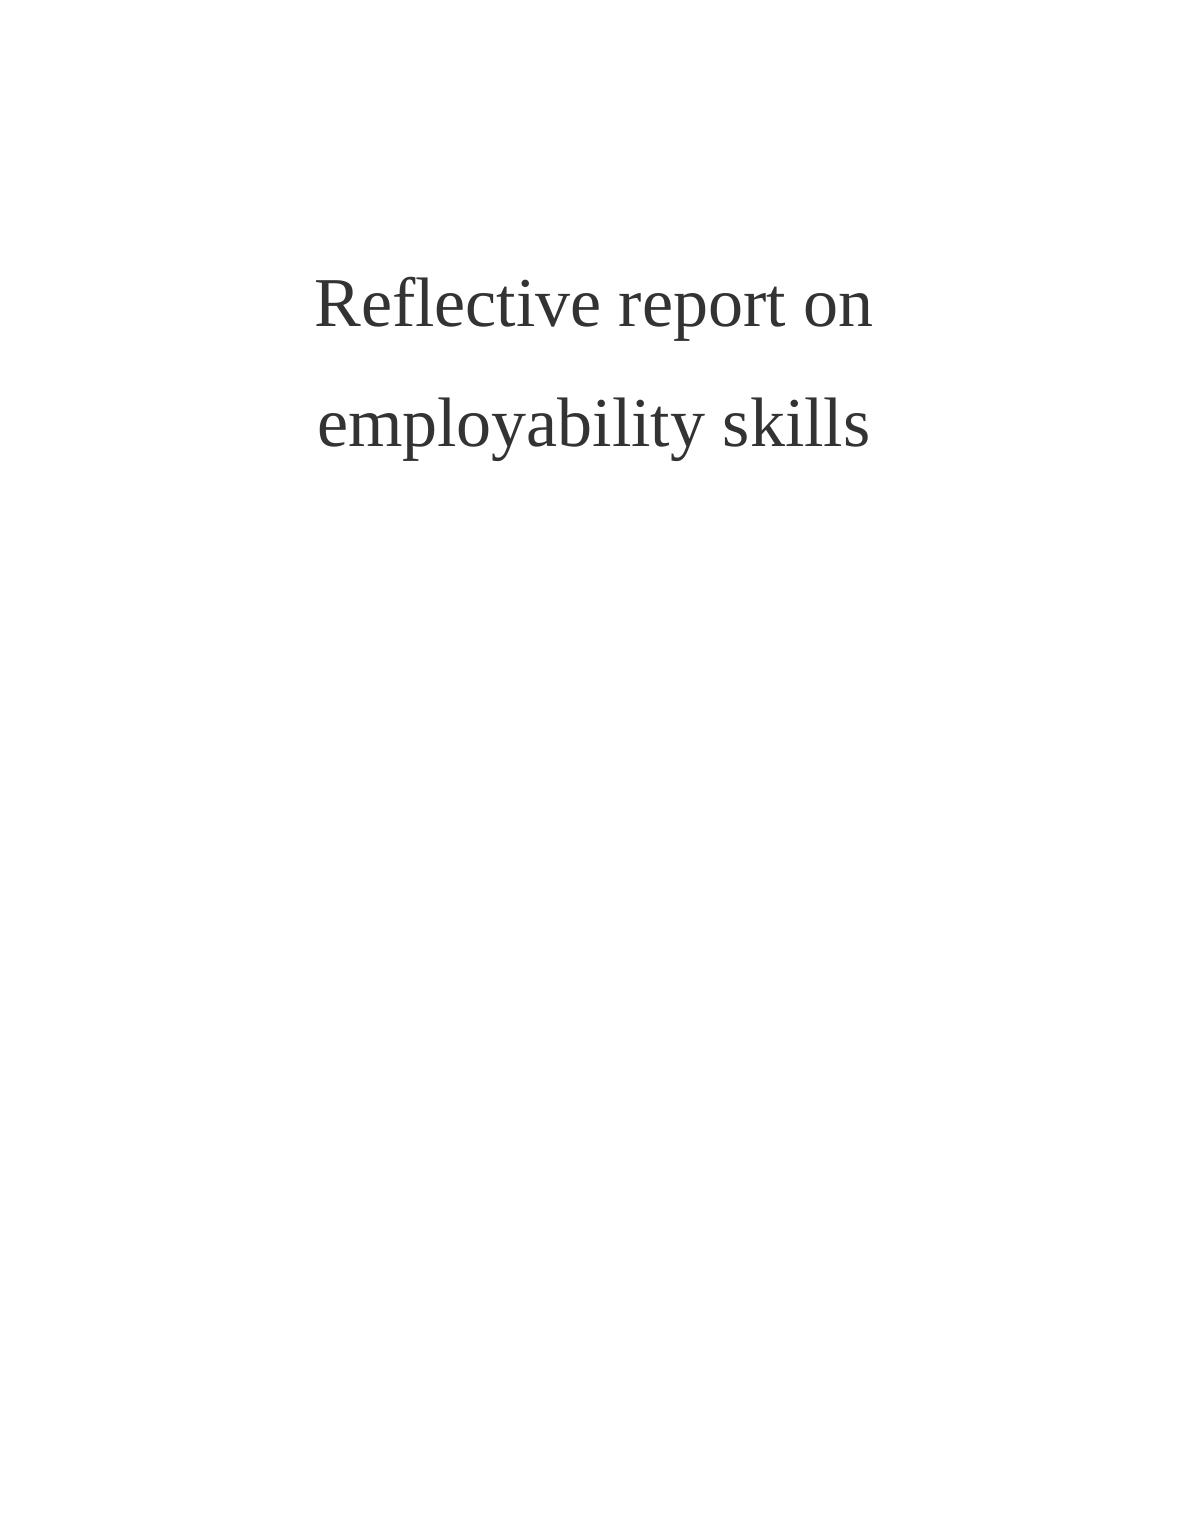 Reflective report focused on key employability skills_1